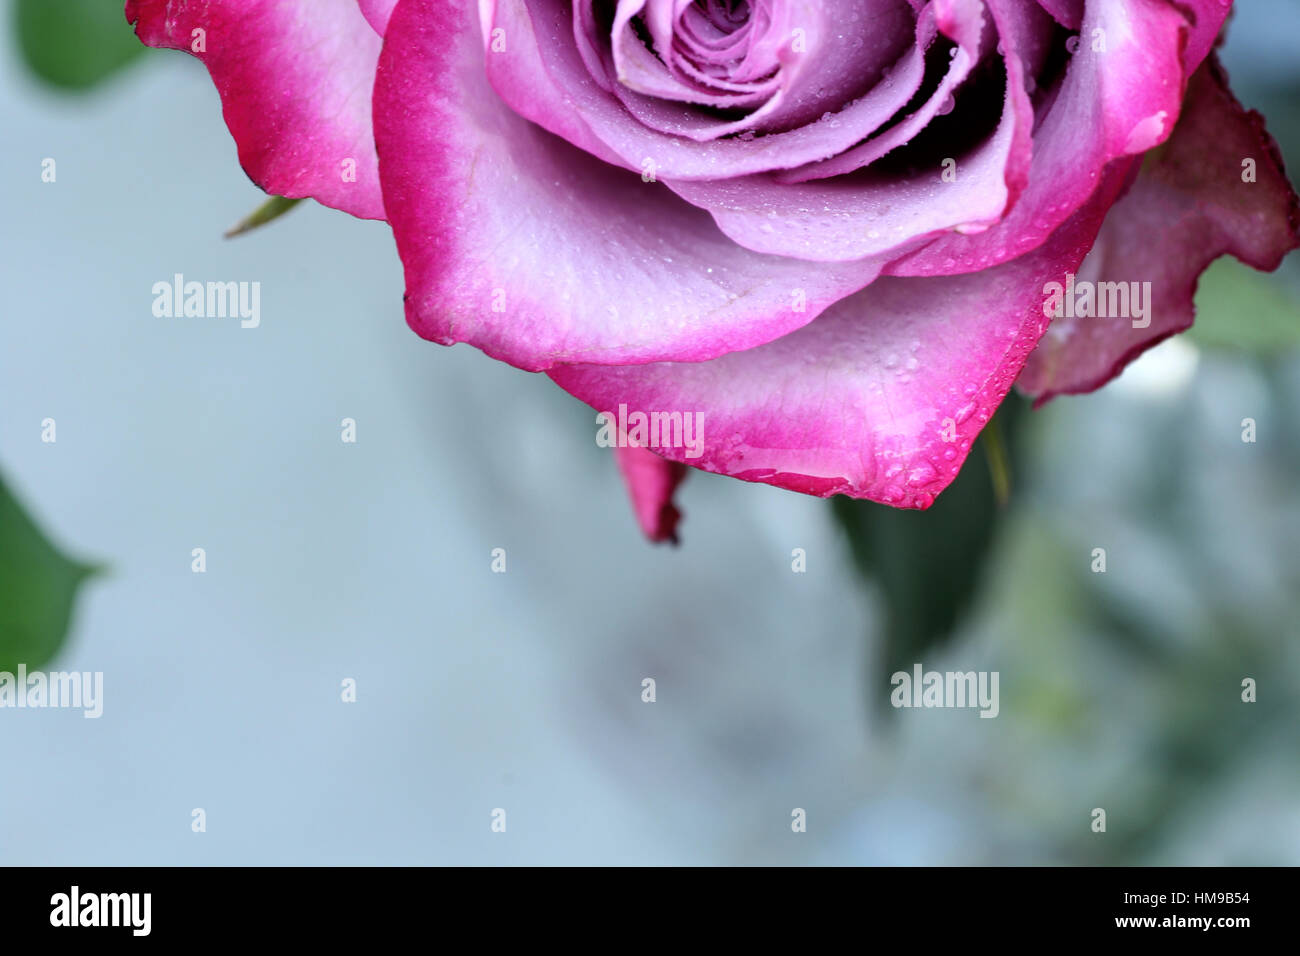 single pink rose up close on a light background Stock Photo